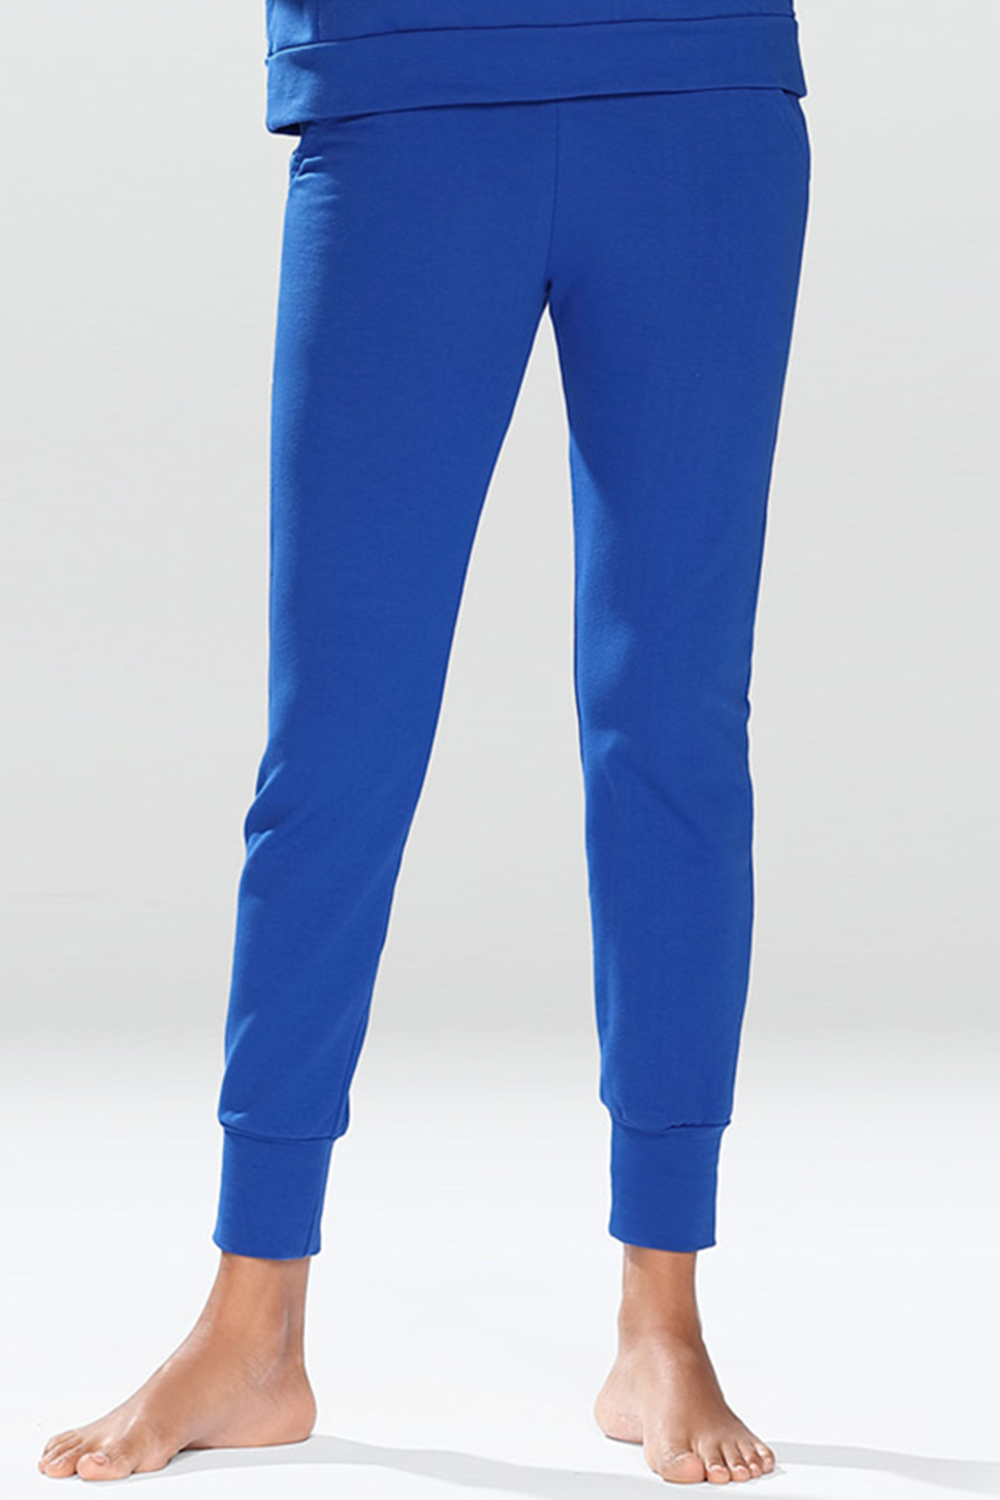 Dkaren Seattle Spodnie dres, niebieski